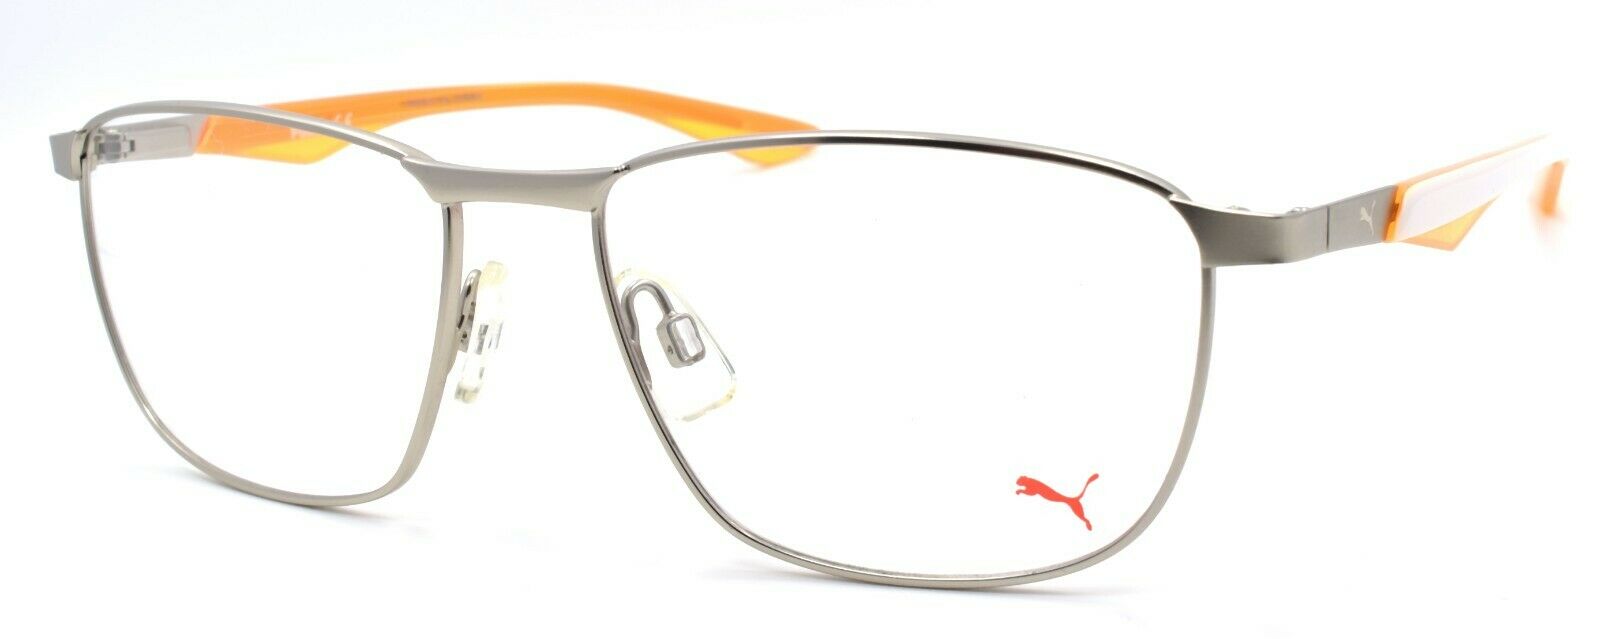 1-PUMA PU0066O 001 Men's Eyeglasses Frames 54-16-140 Silver / White / Orange-889652028316-IKSpecs